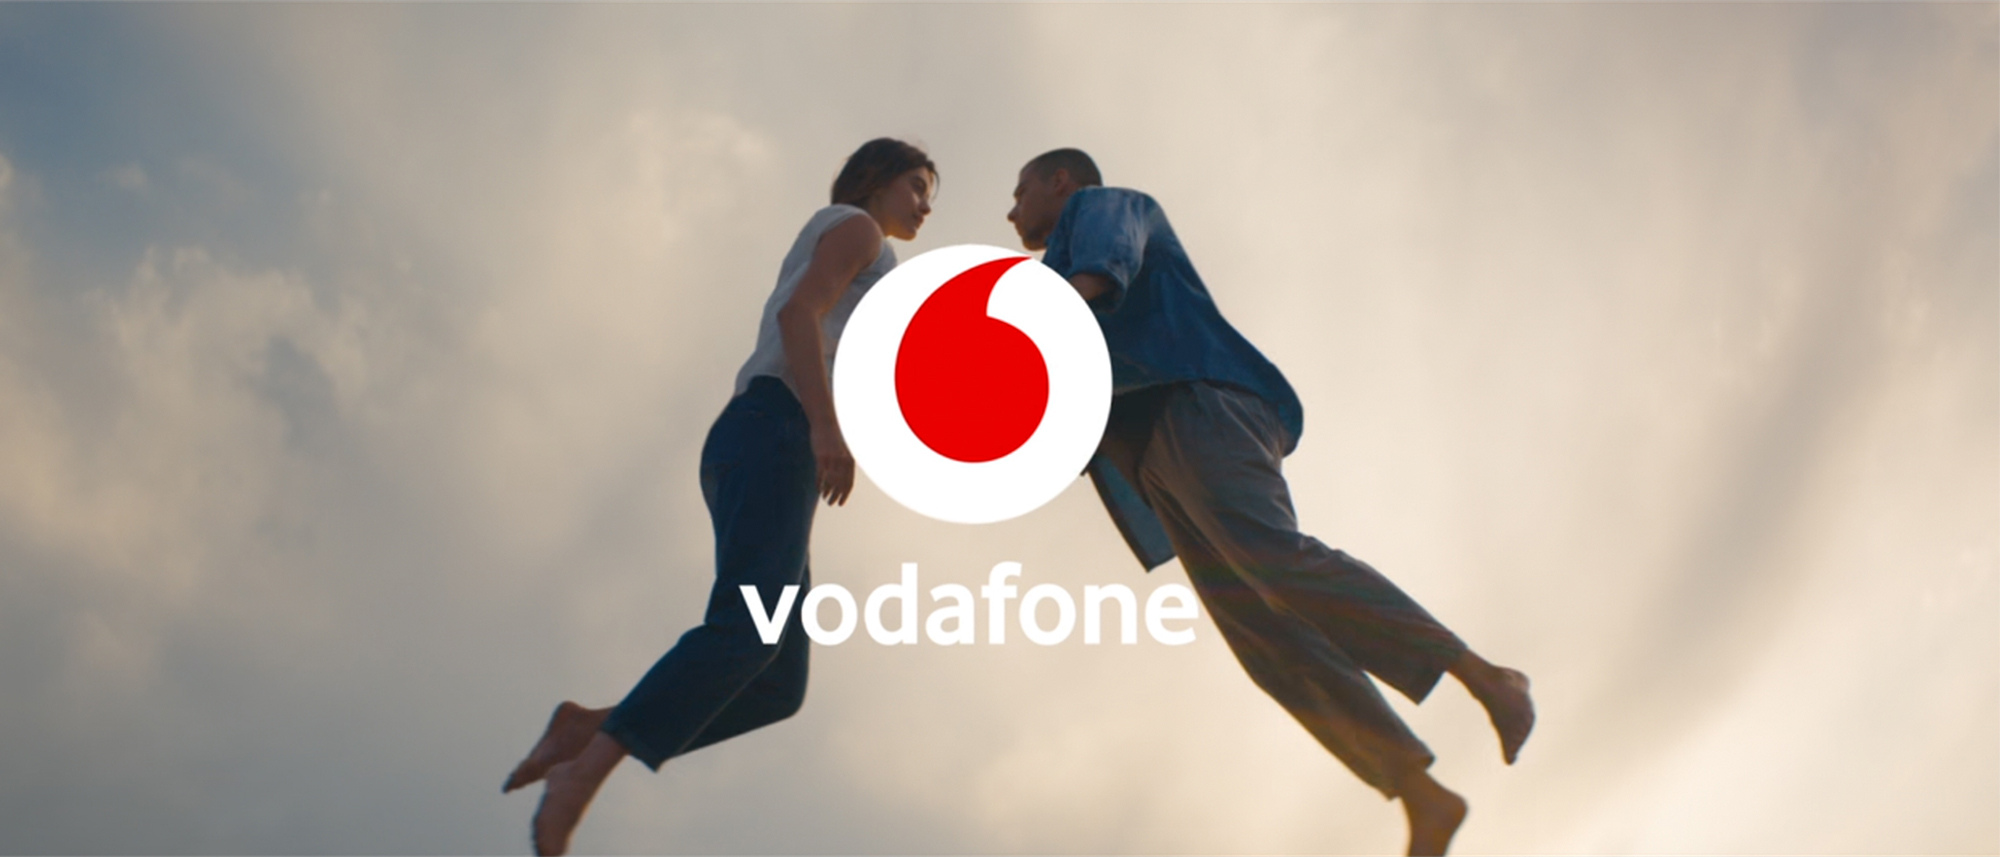 Vodafone-power-of-freedom-movemend-director-choreographer-Marie-Zechiel1